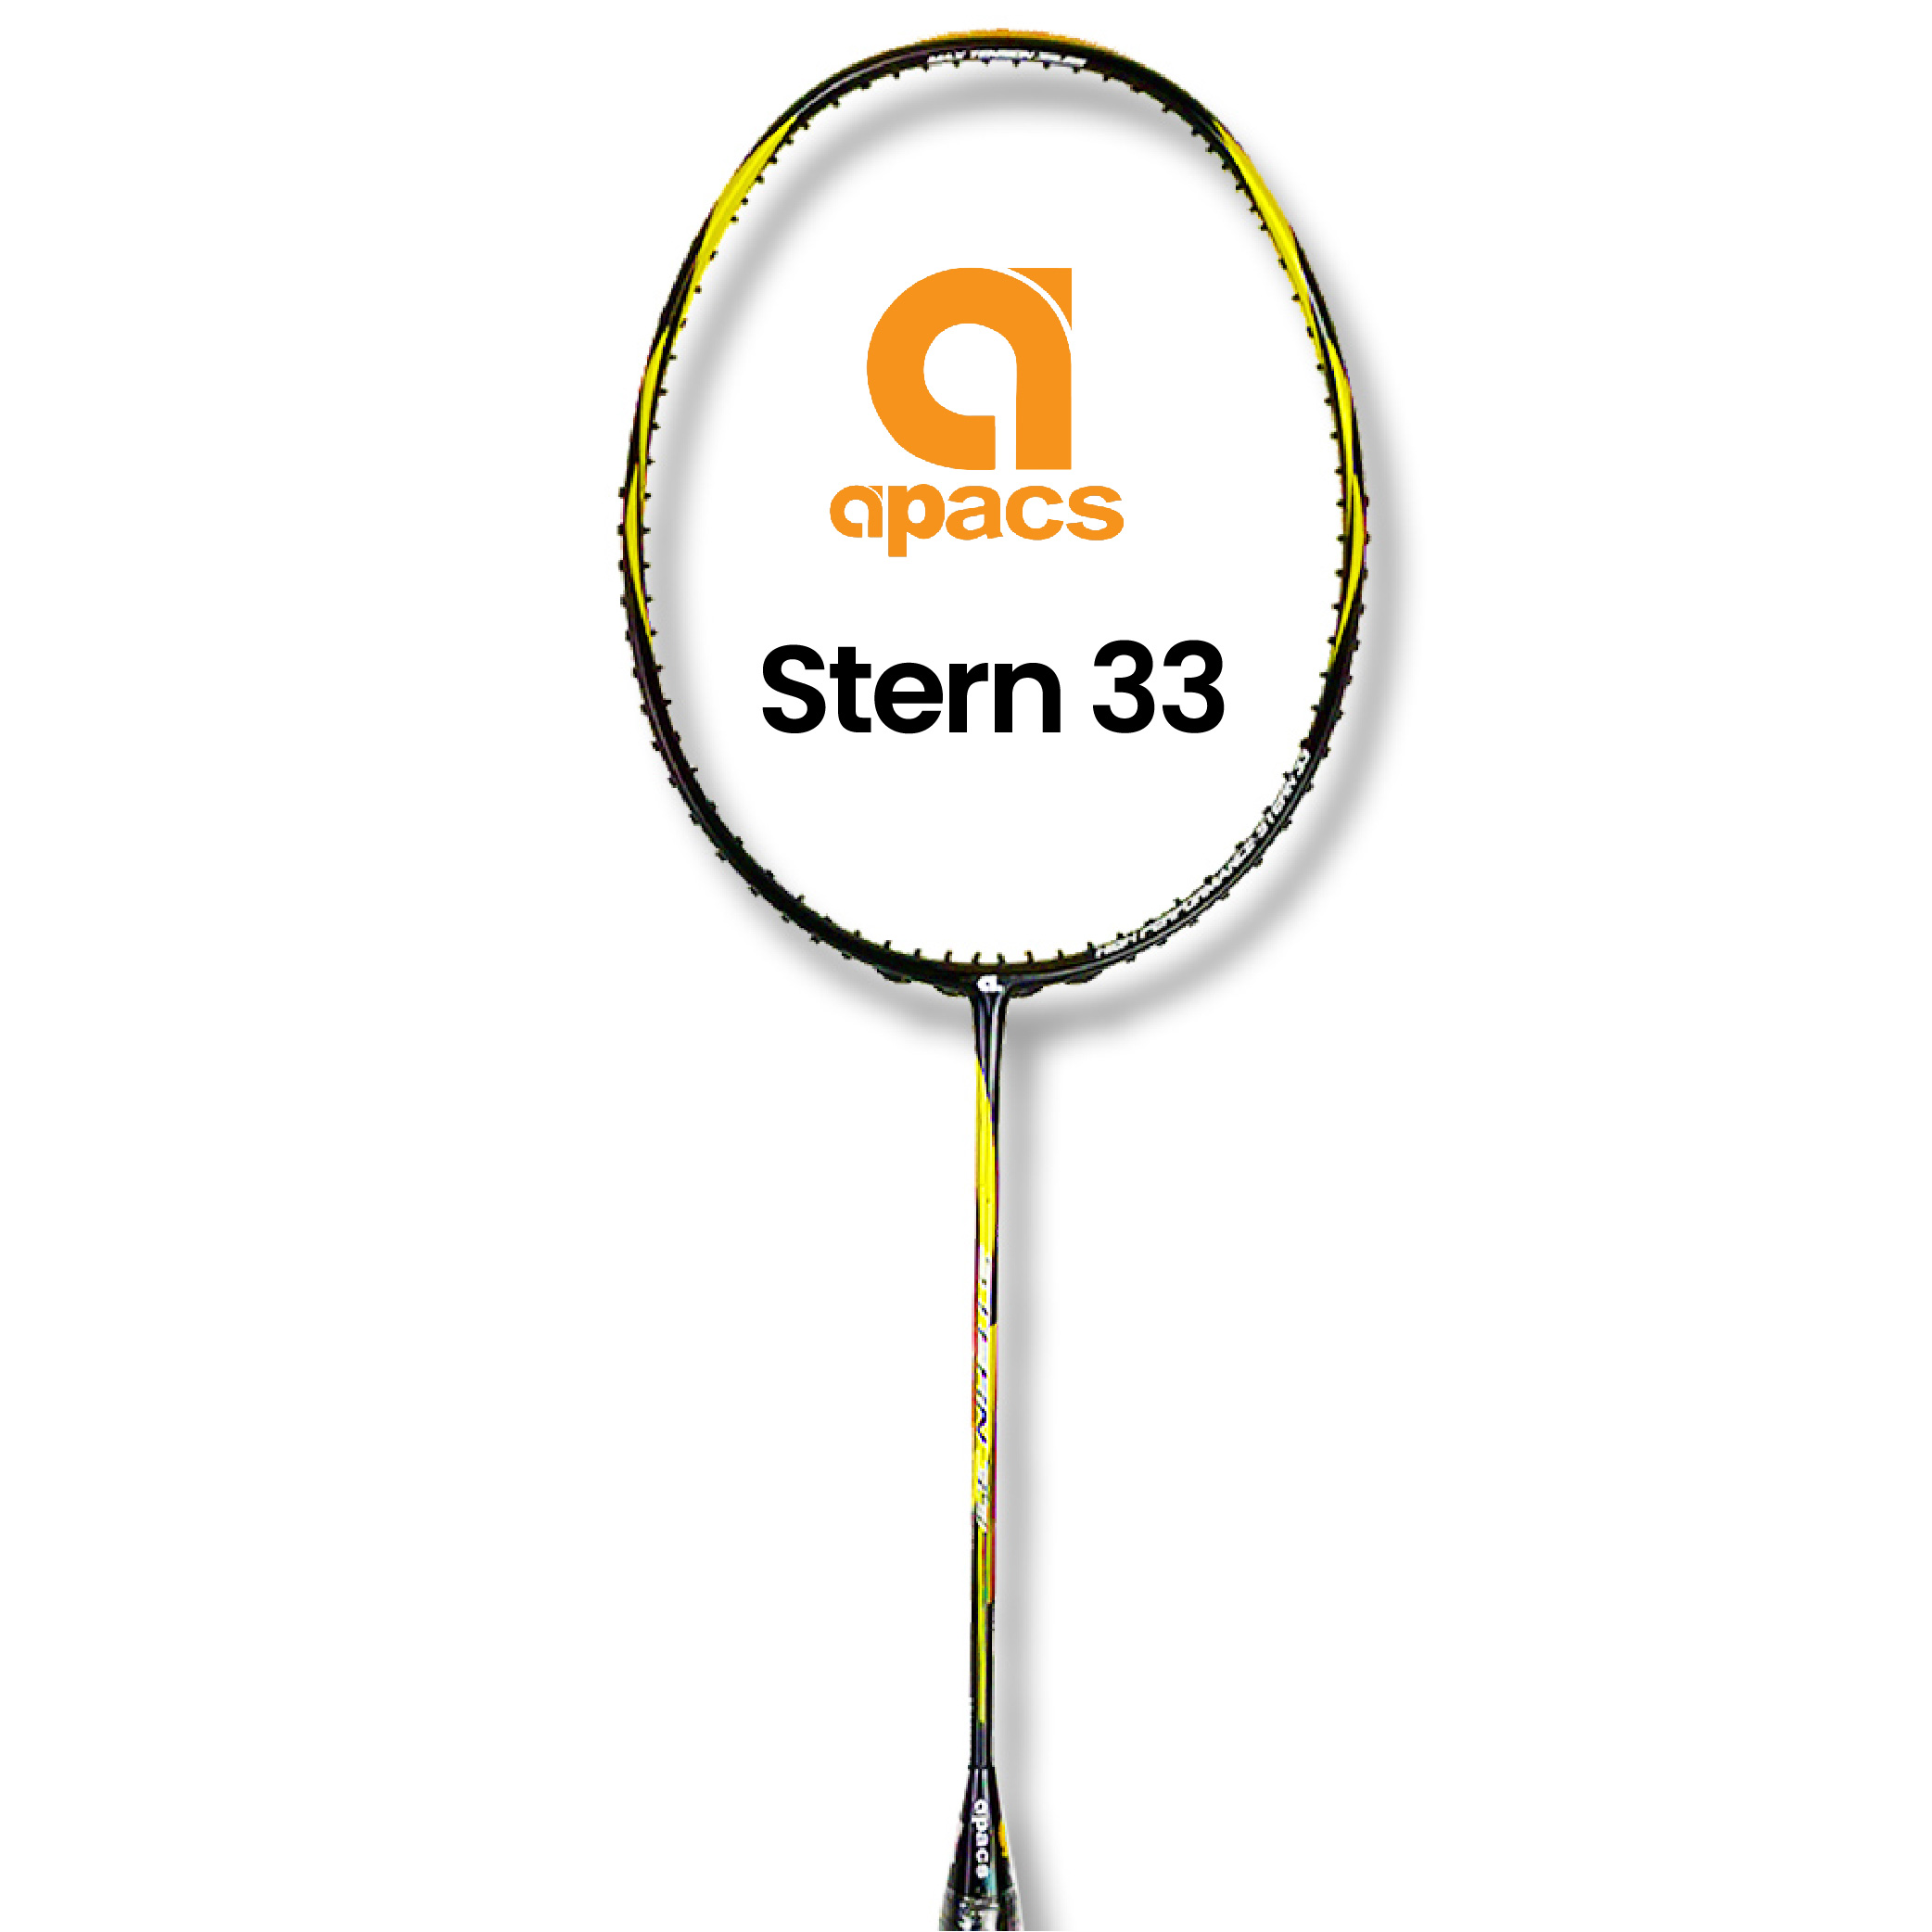 New & Unstrung Free Shipping 2 Apacs Stern 33 Black Yellow Badminton Racket 